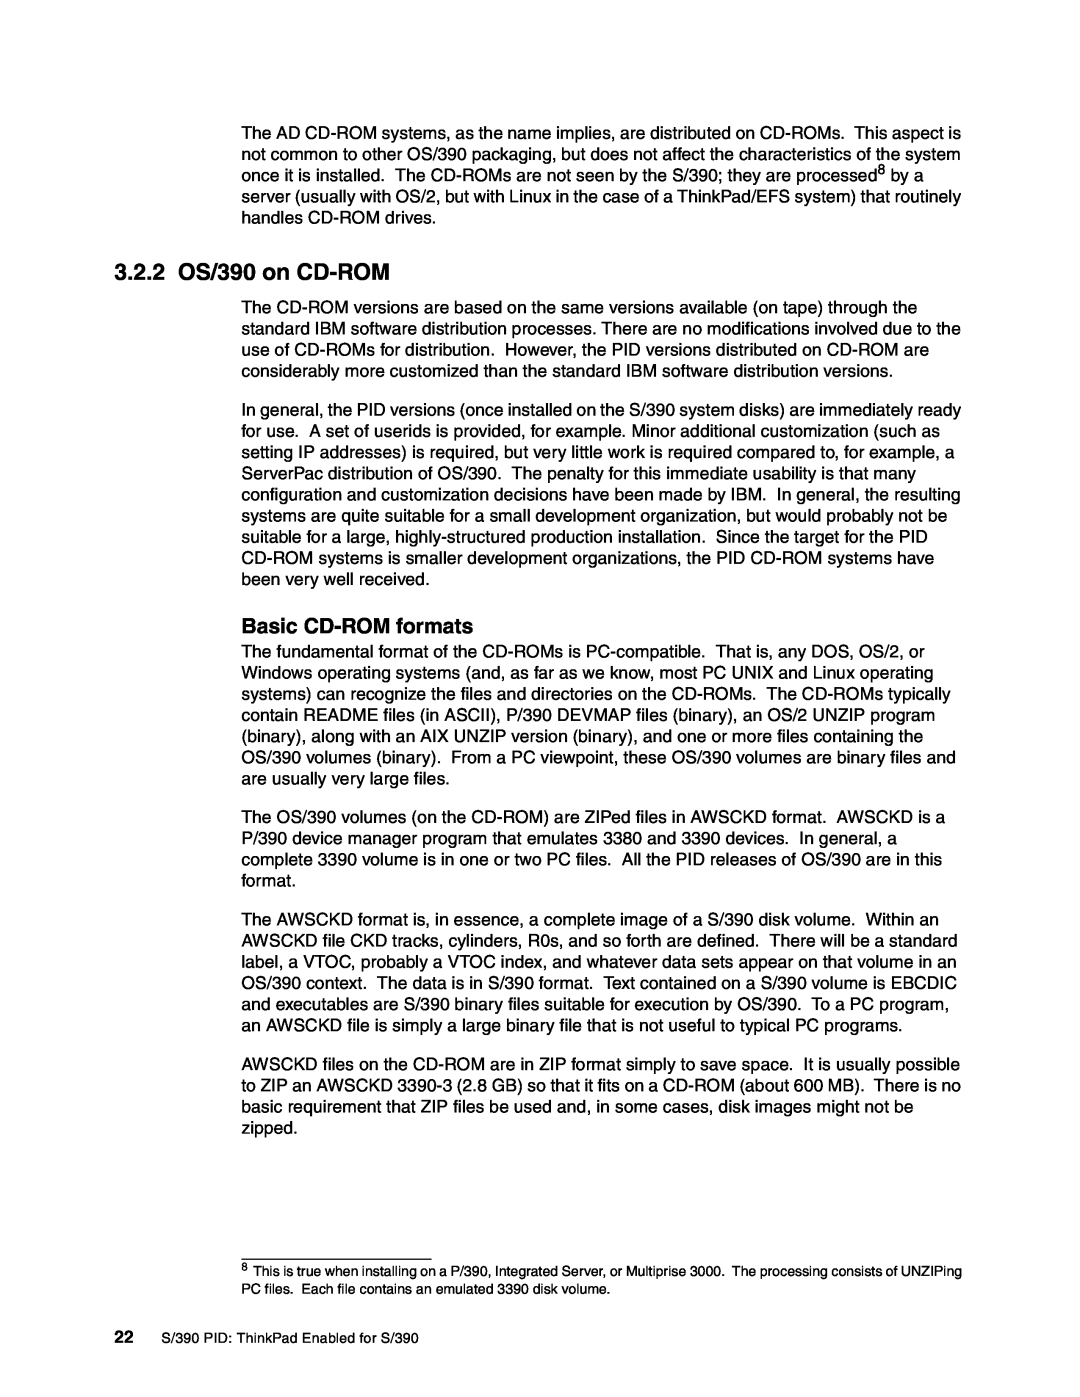 IBM s/390 manual 3.2.2 OS/390 on CD-ROM, Basic CD-ROM formats 